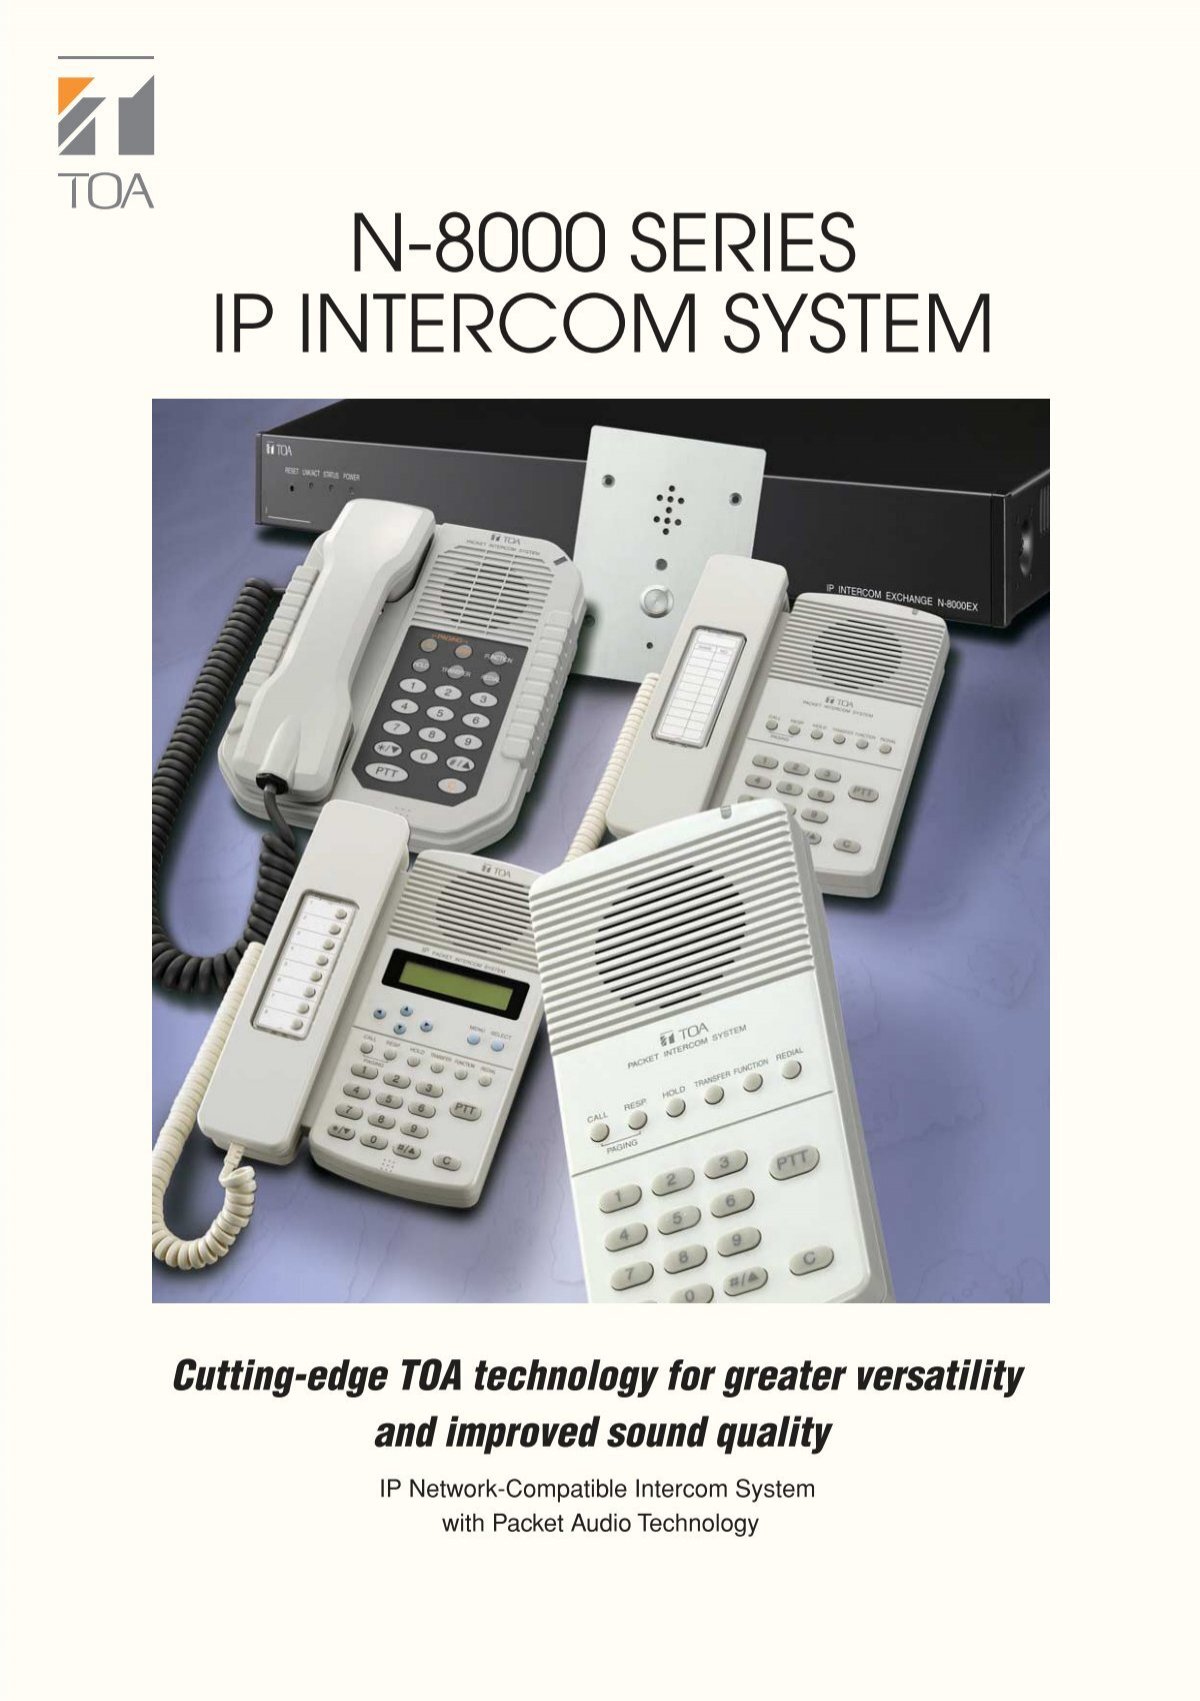 N-8000 Series IP Intercom System, Products